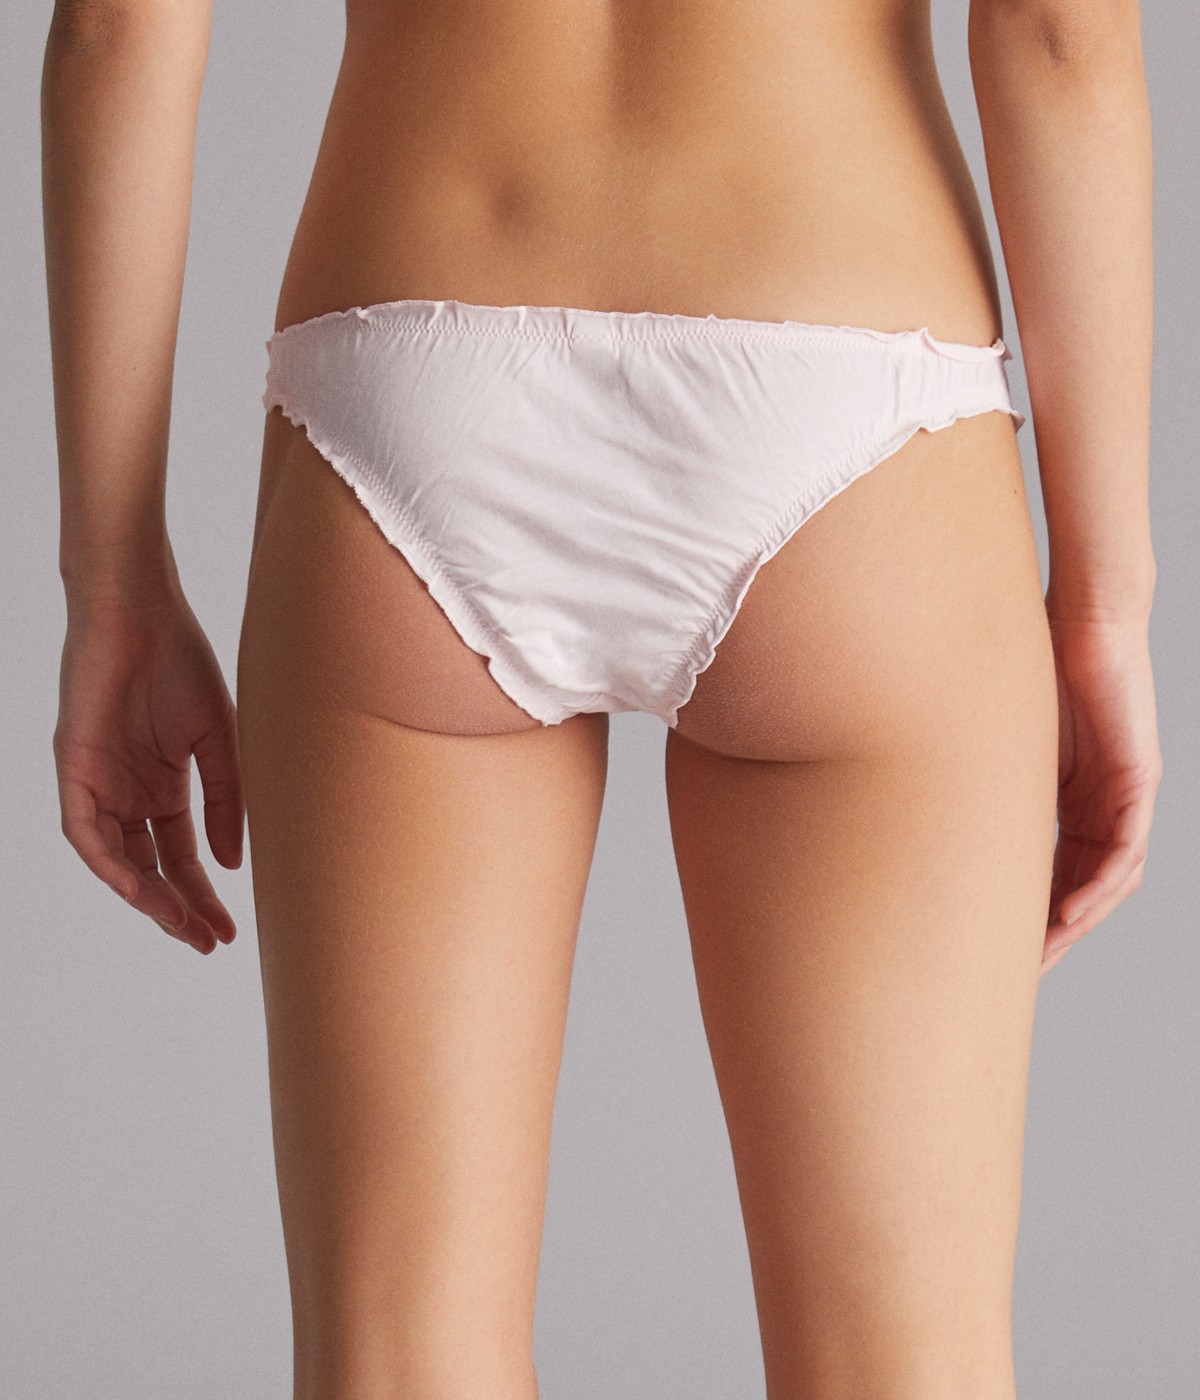 Cotton Frill Brazilian Panties.